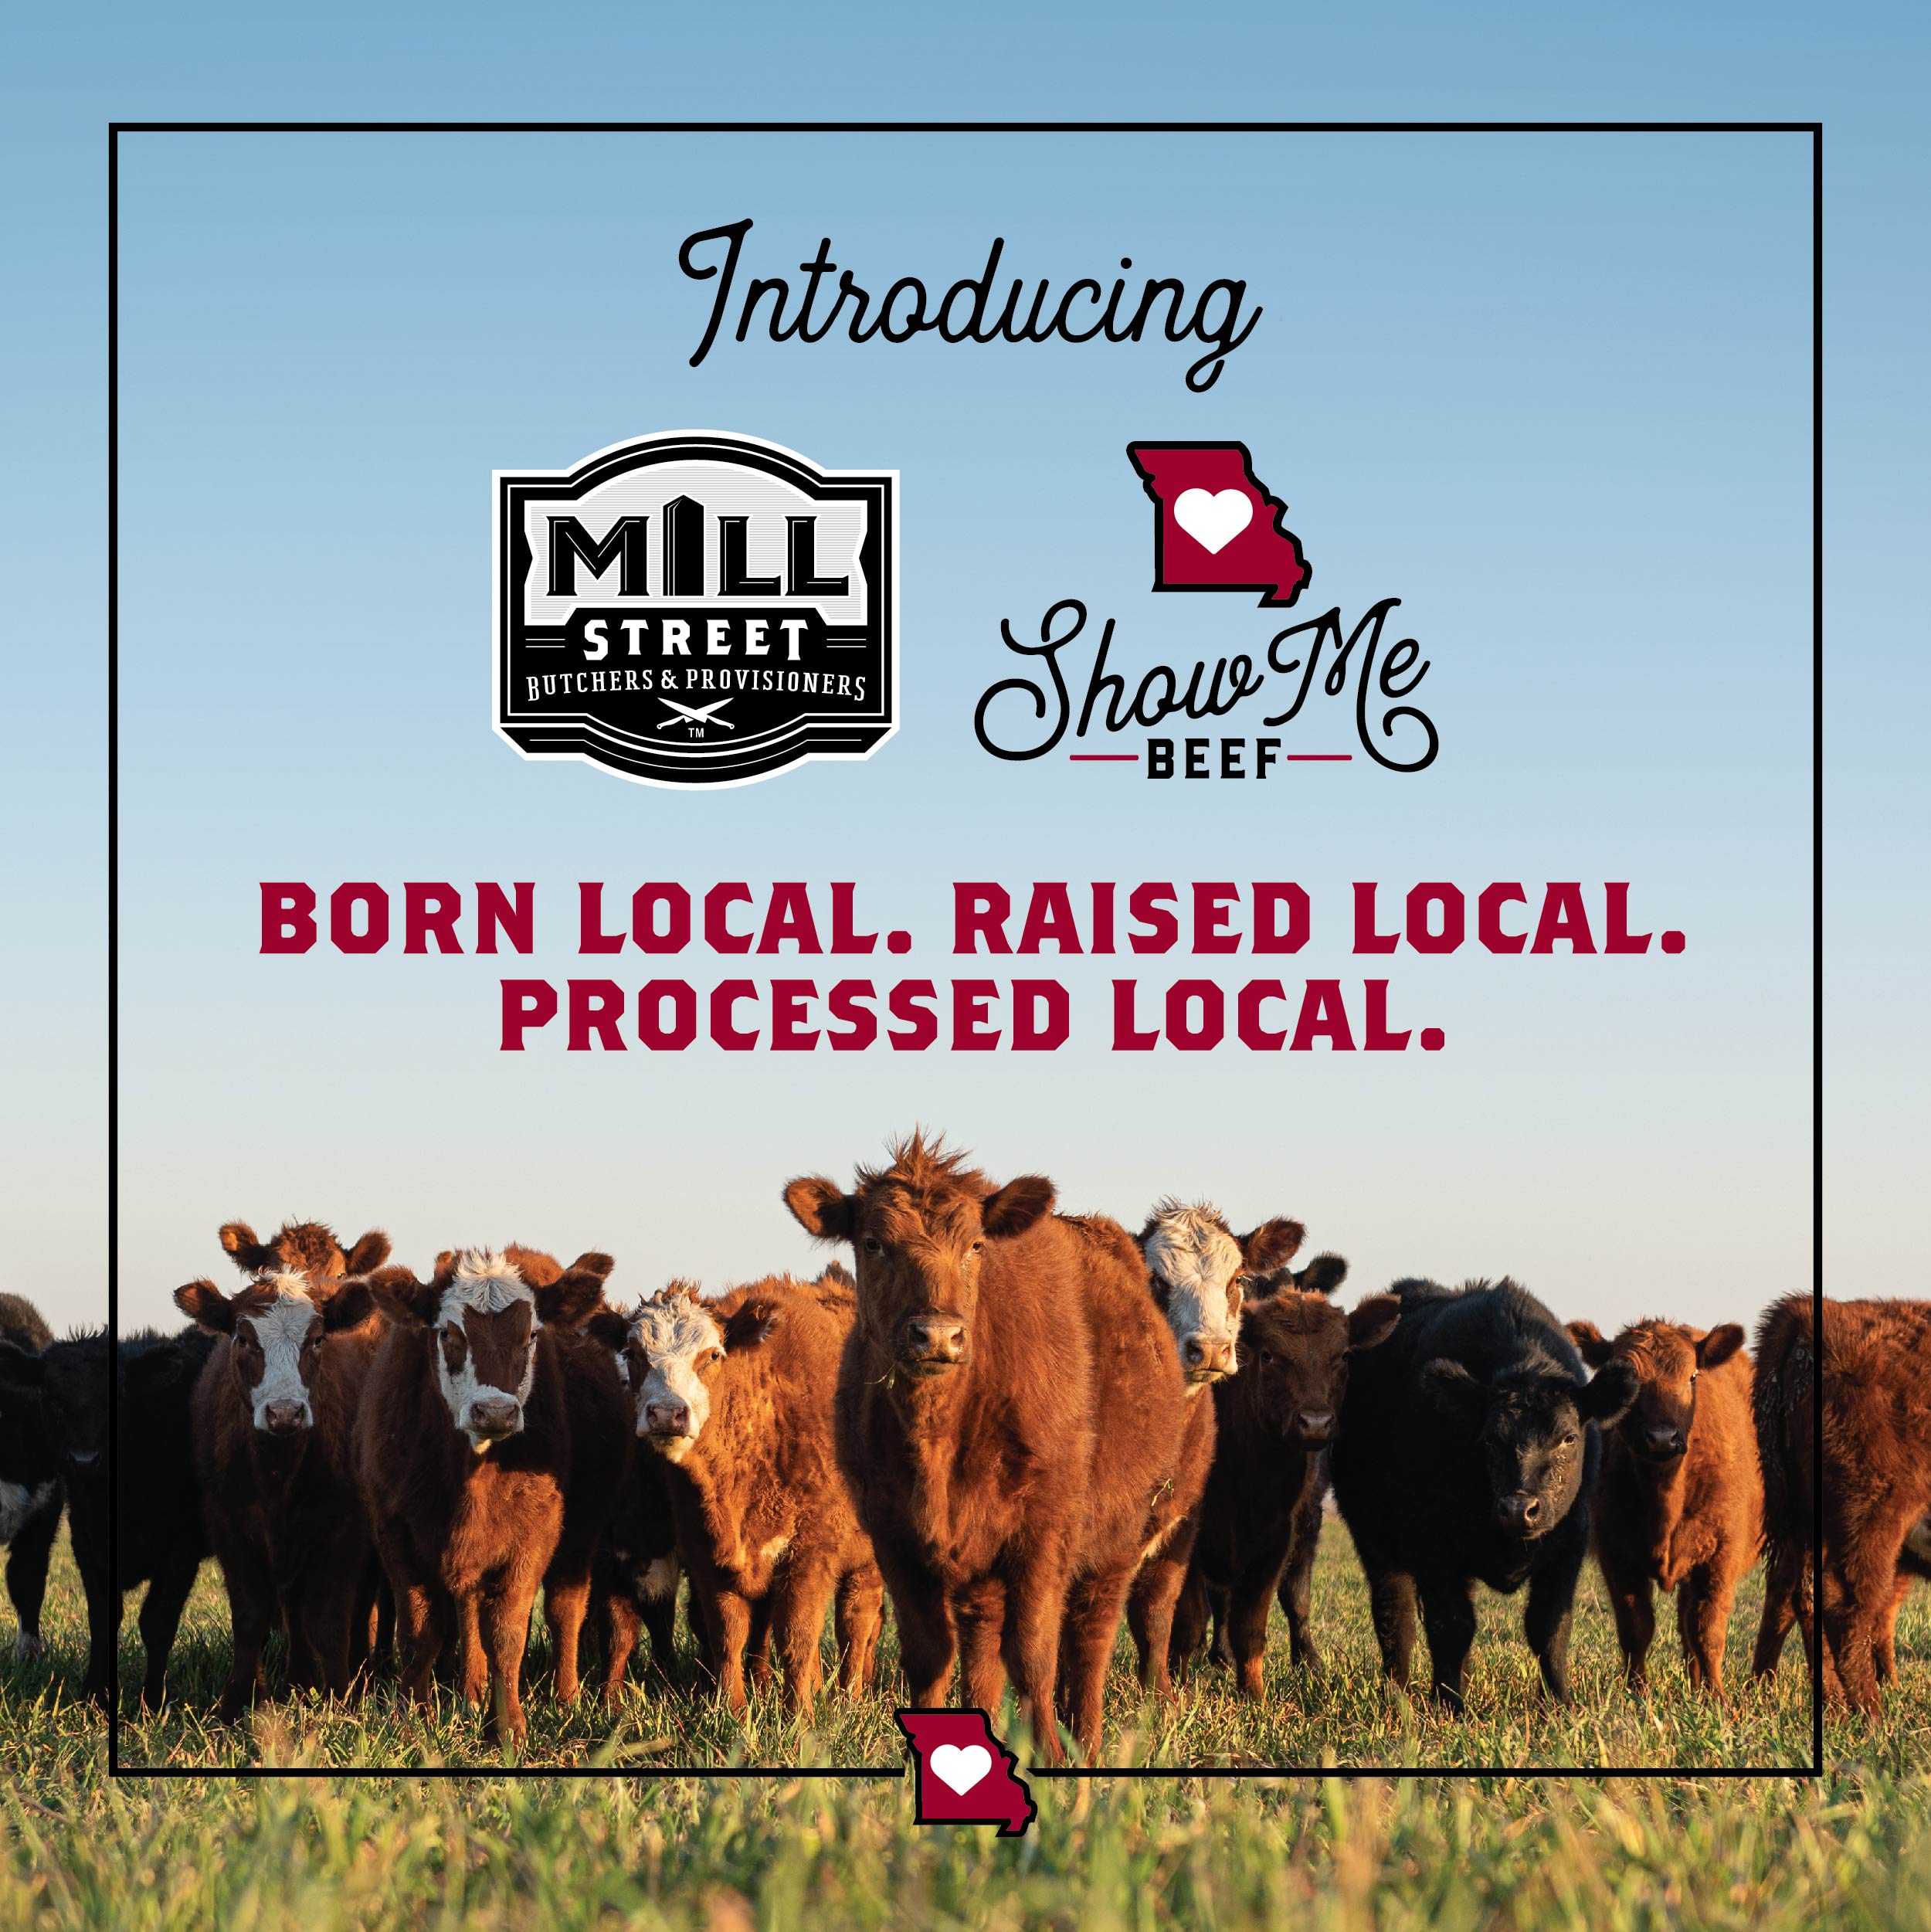 SGC Foodservice Announces Partnership with Missouri Prime Beef